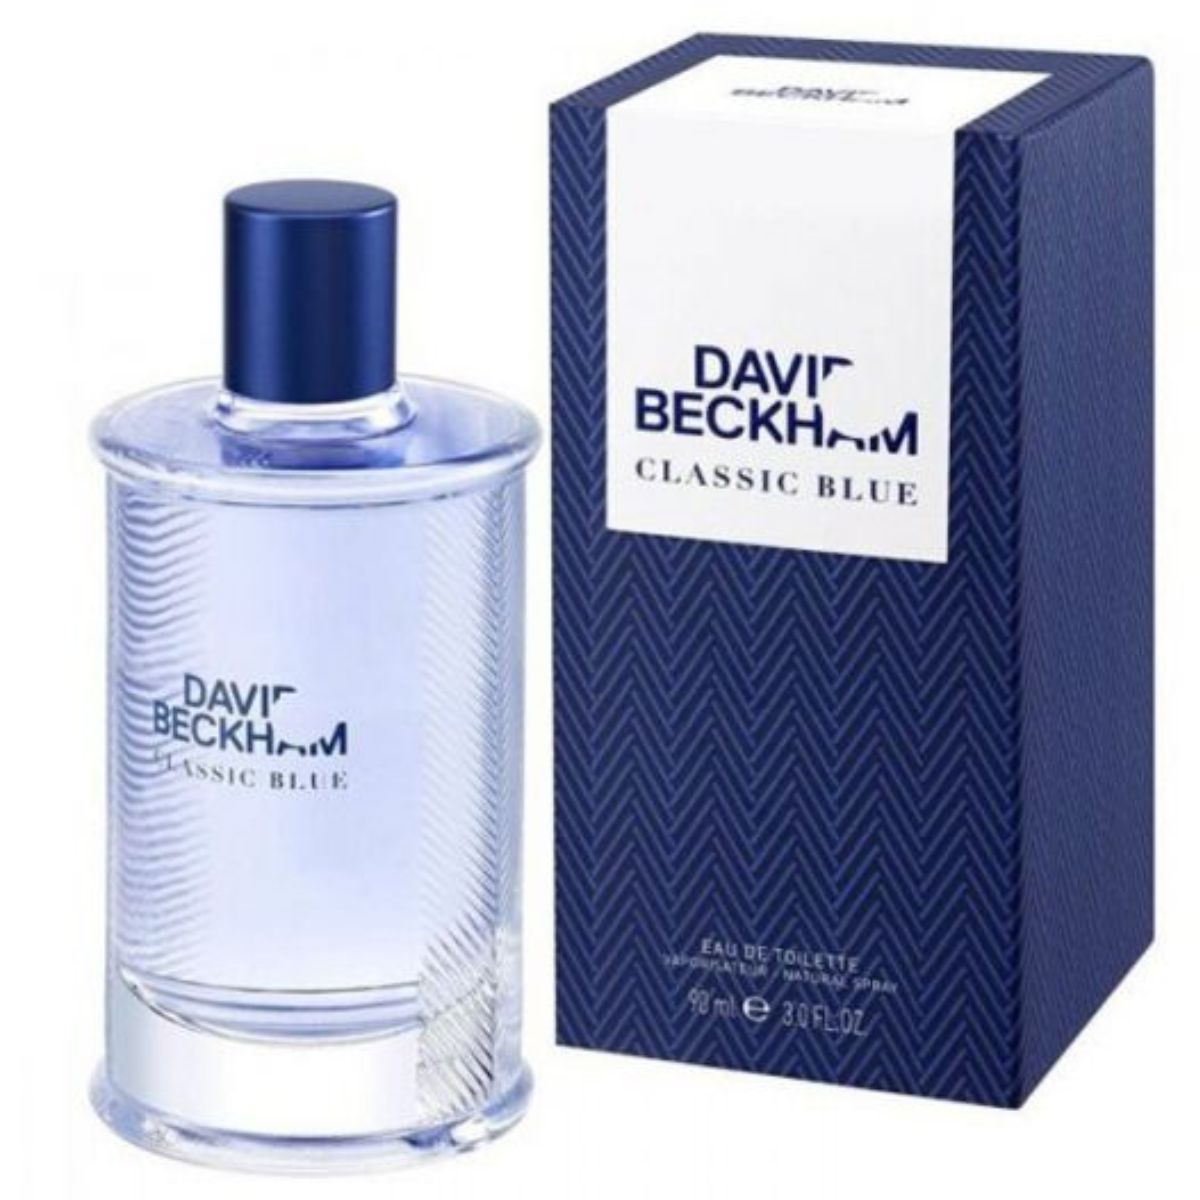 David Beckham - Classic Blue Perfume - 90ml.